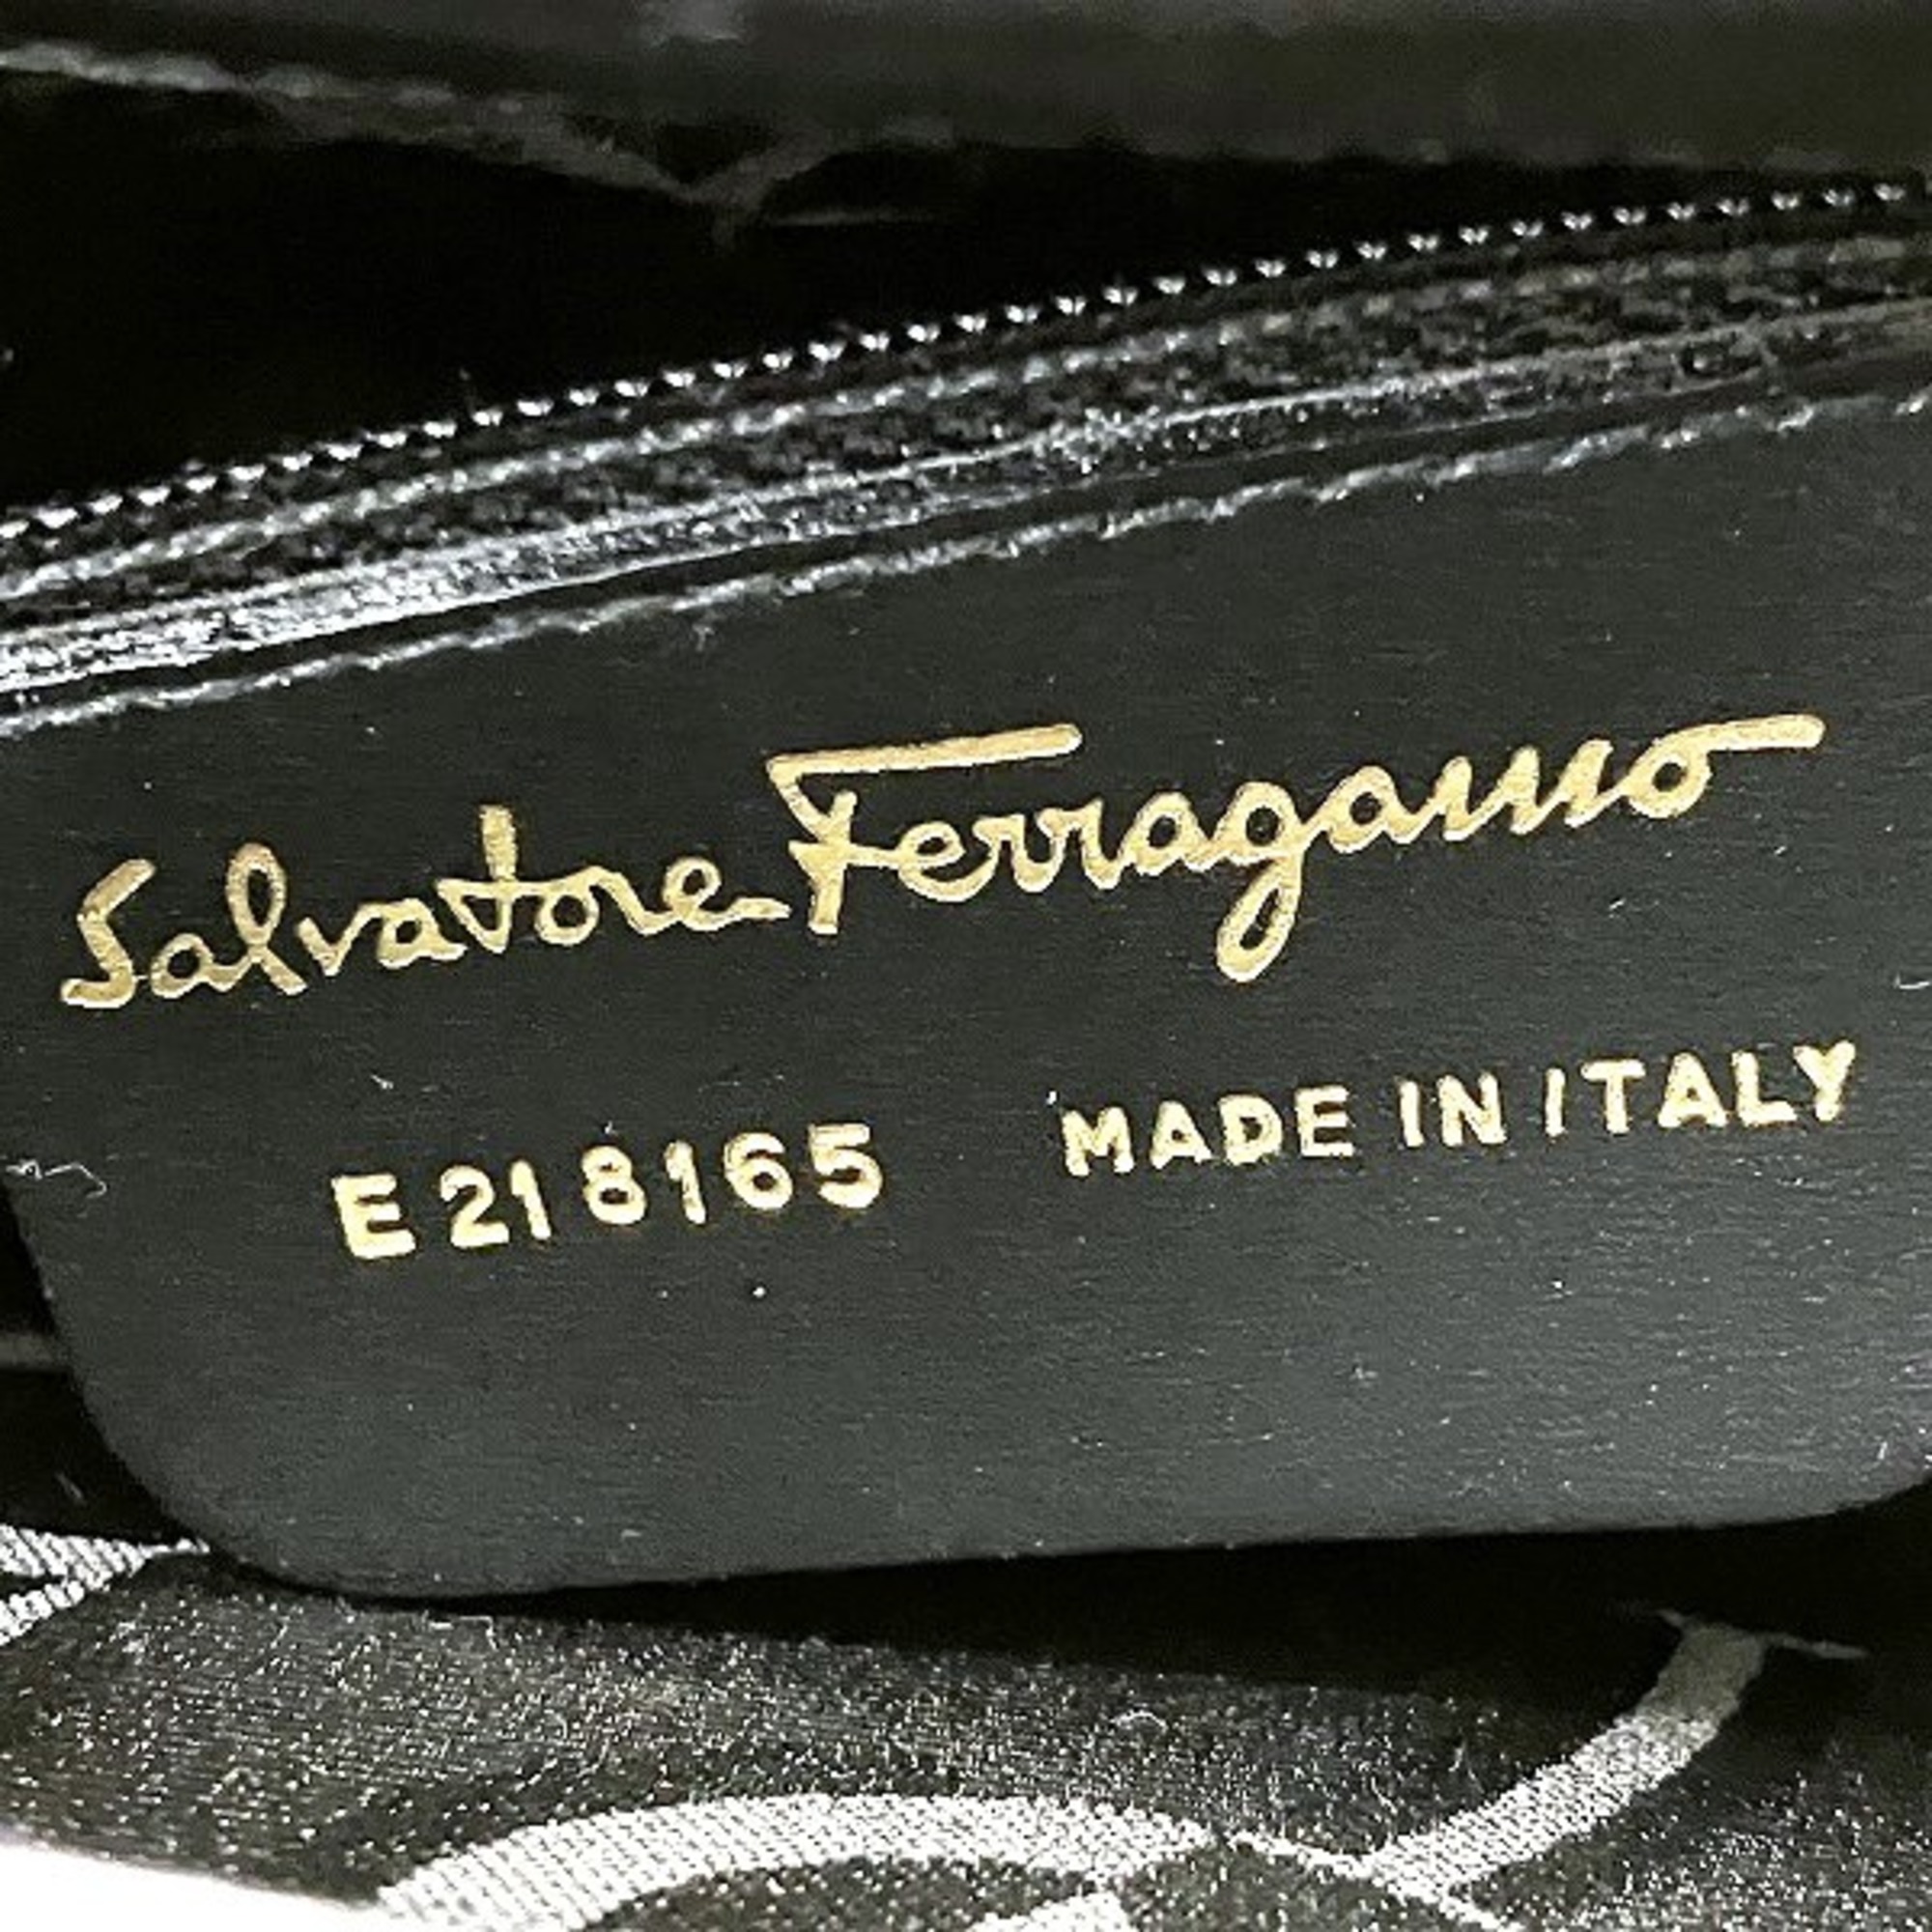 Salvatore Ferragamo Gancini B218165 Bag Shoulder Ladies